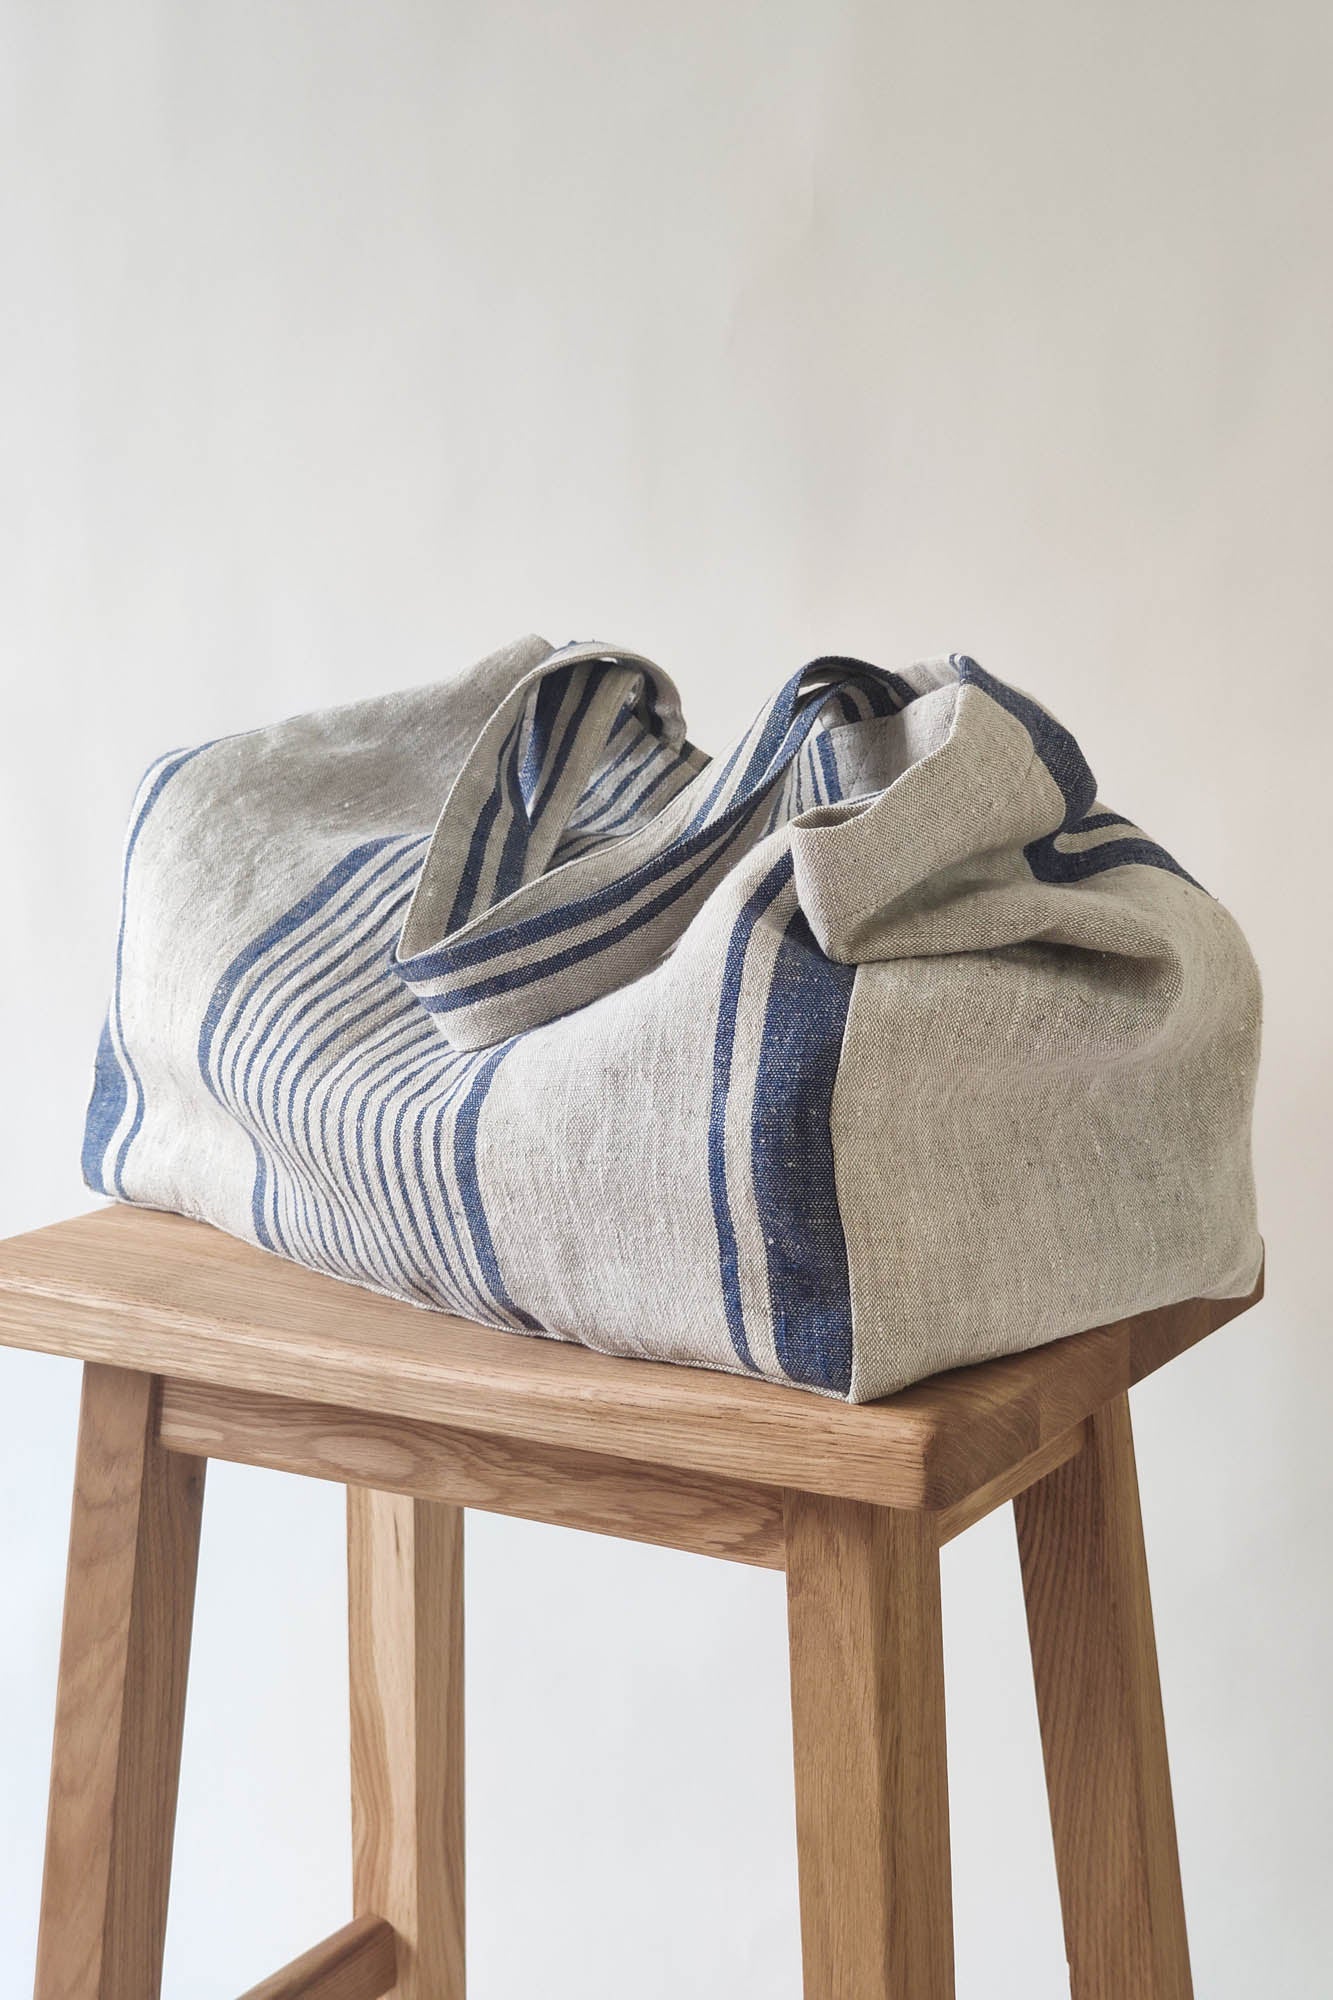 Linen beach bag with blue stripes